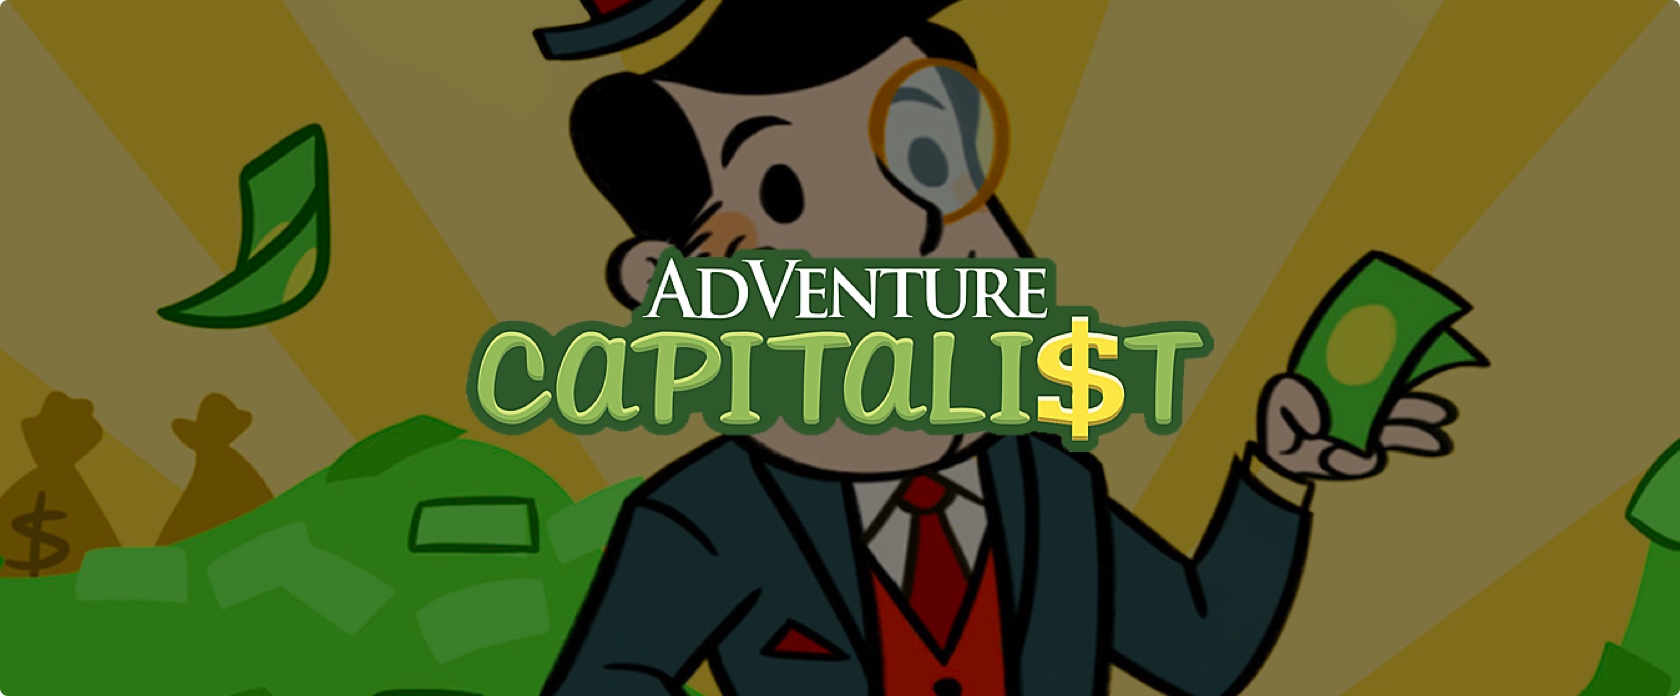 Adventure Capitalist promotion image